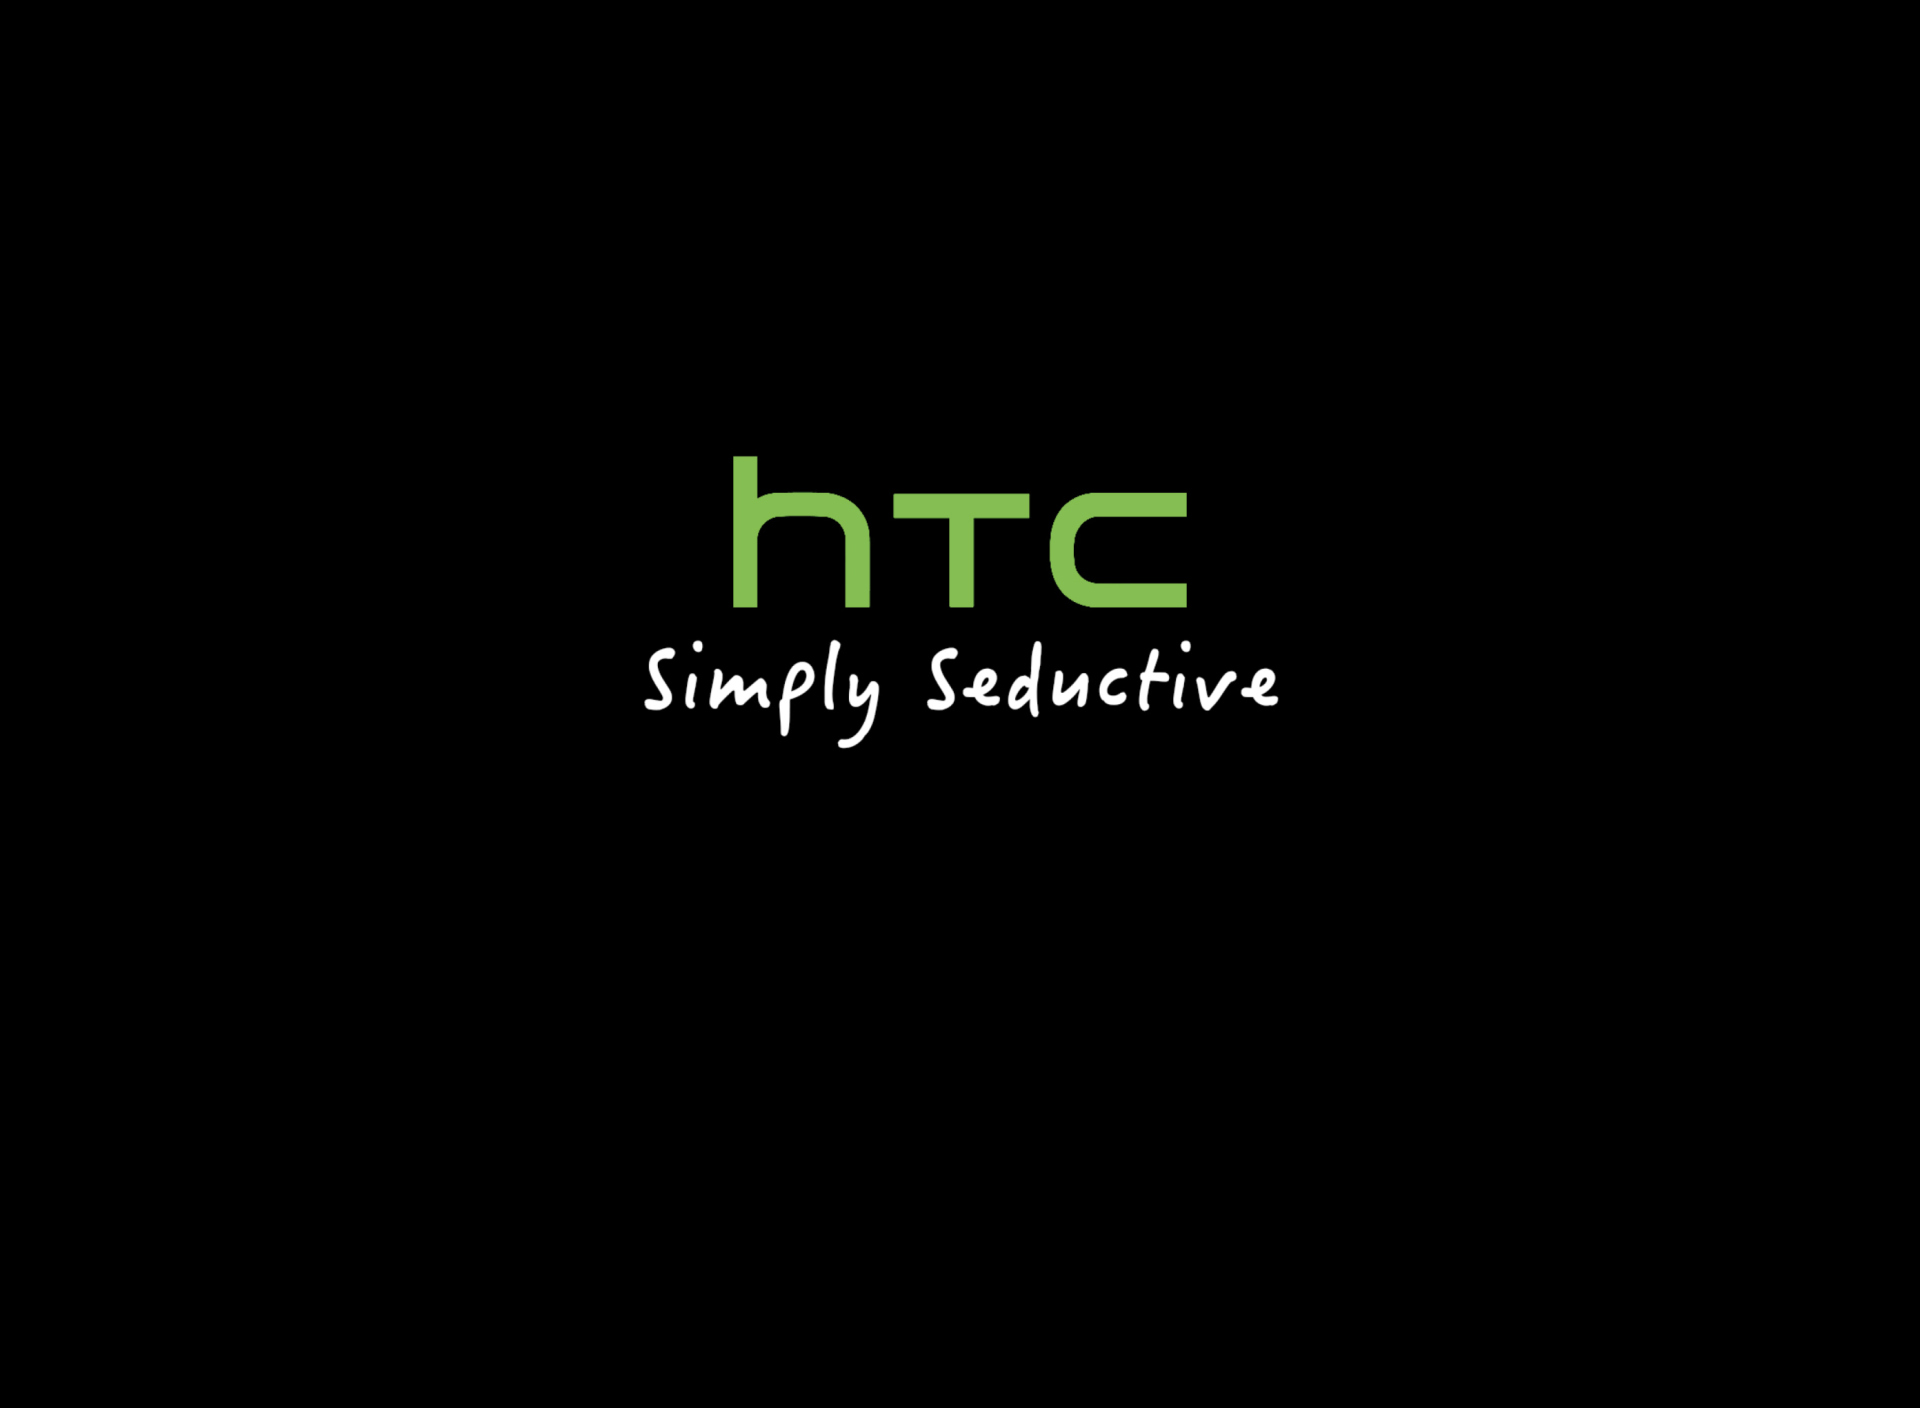 Das HTC - Simply Seductive Wallpaper 1920x1408